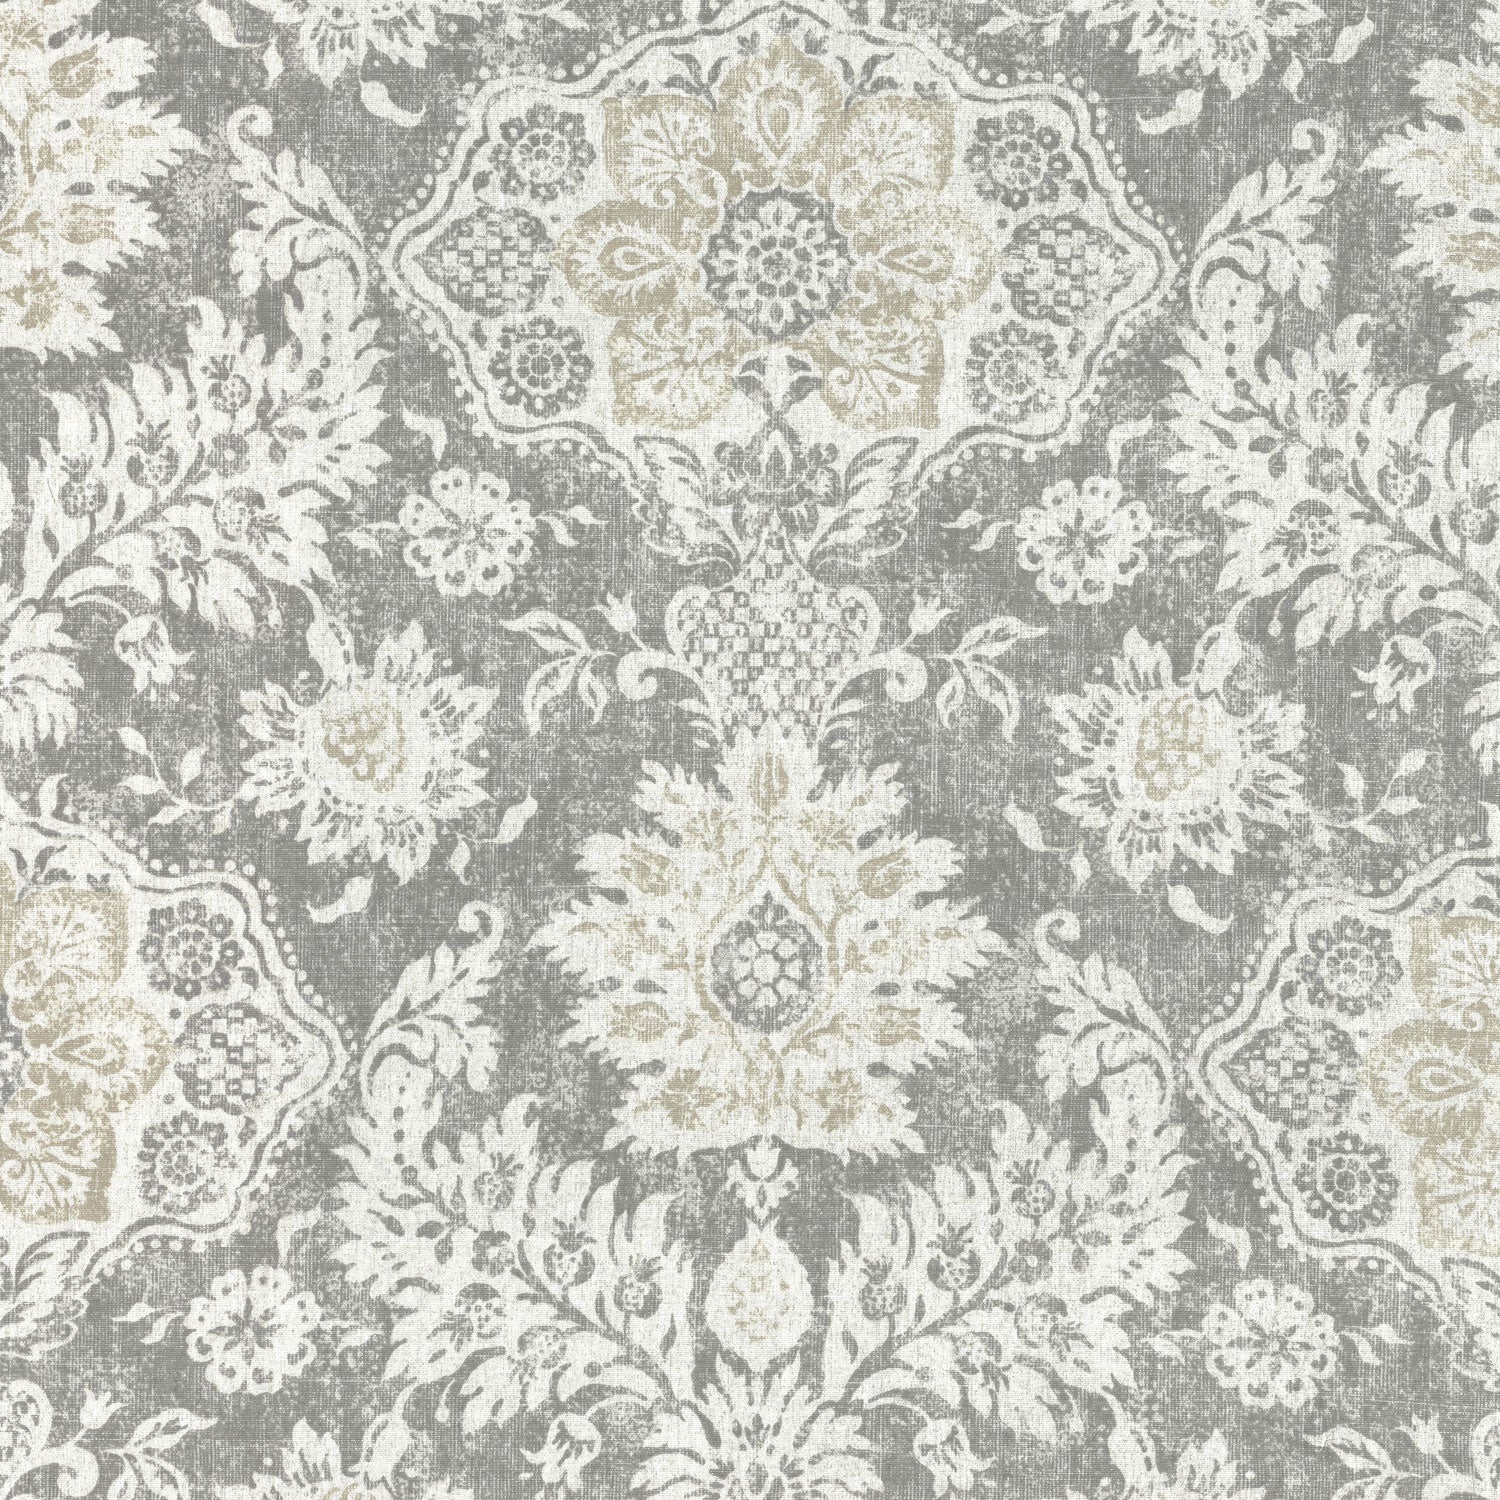 decorative pillows in belmont mist pale gray floral damask